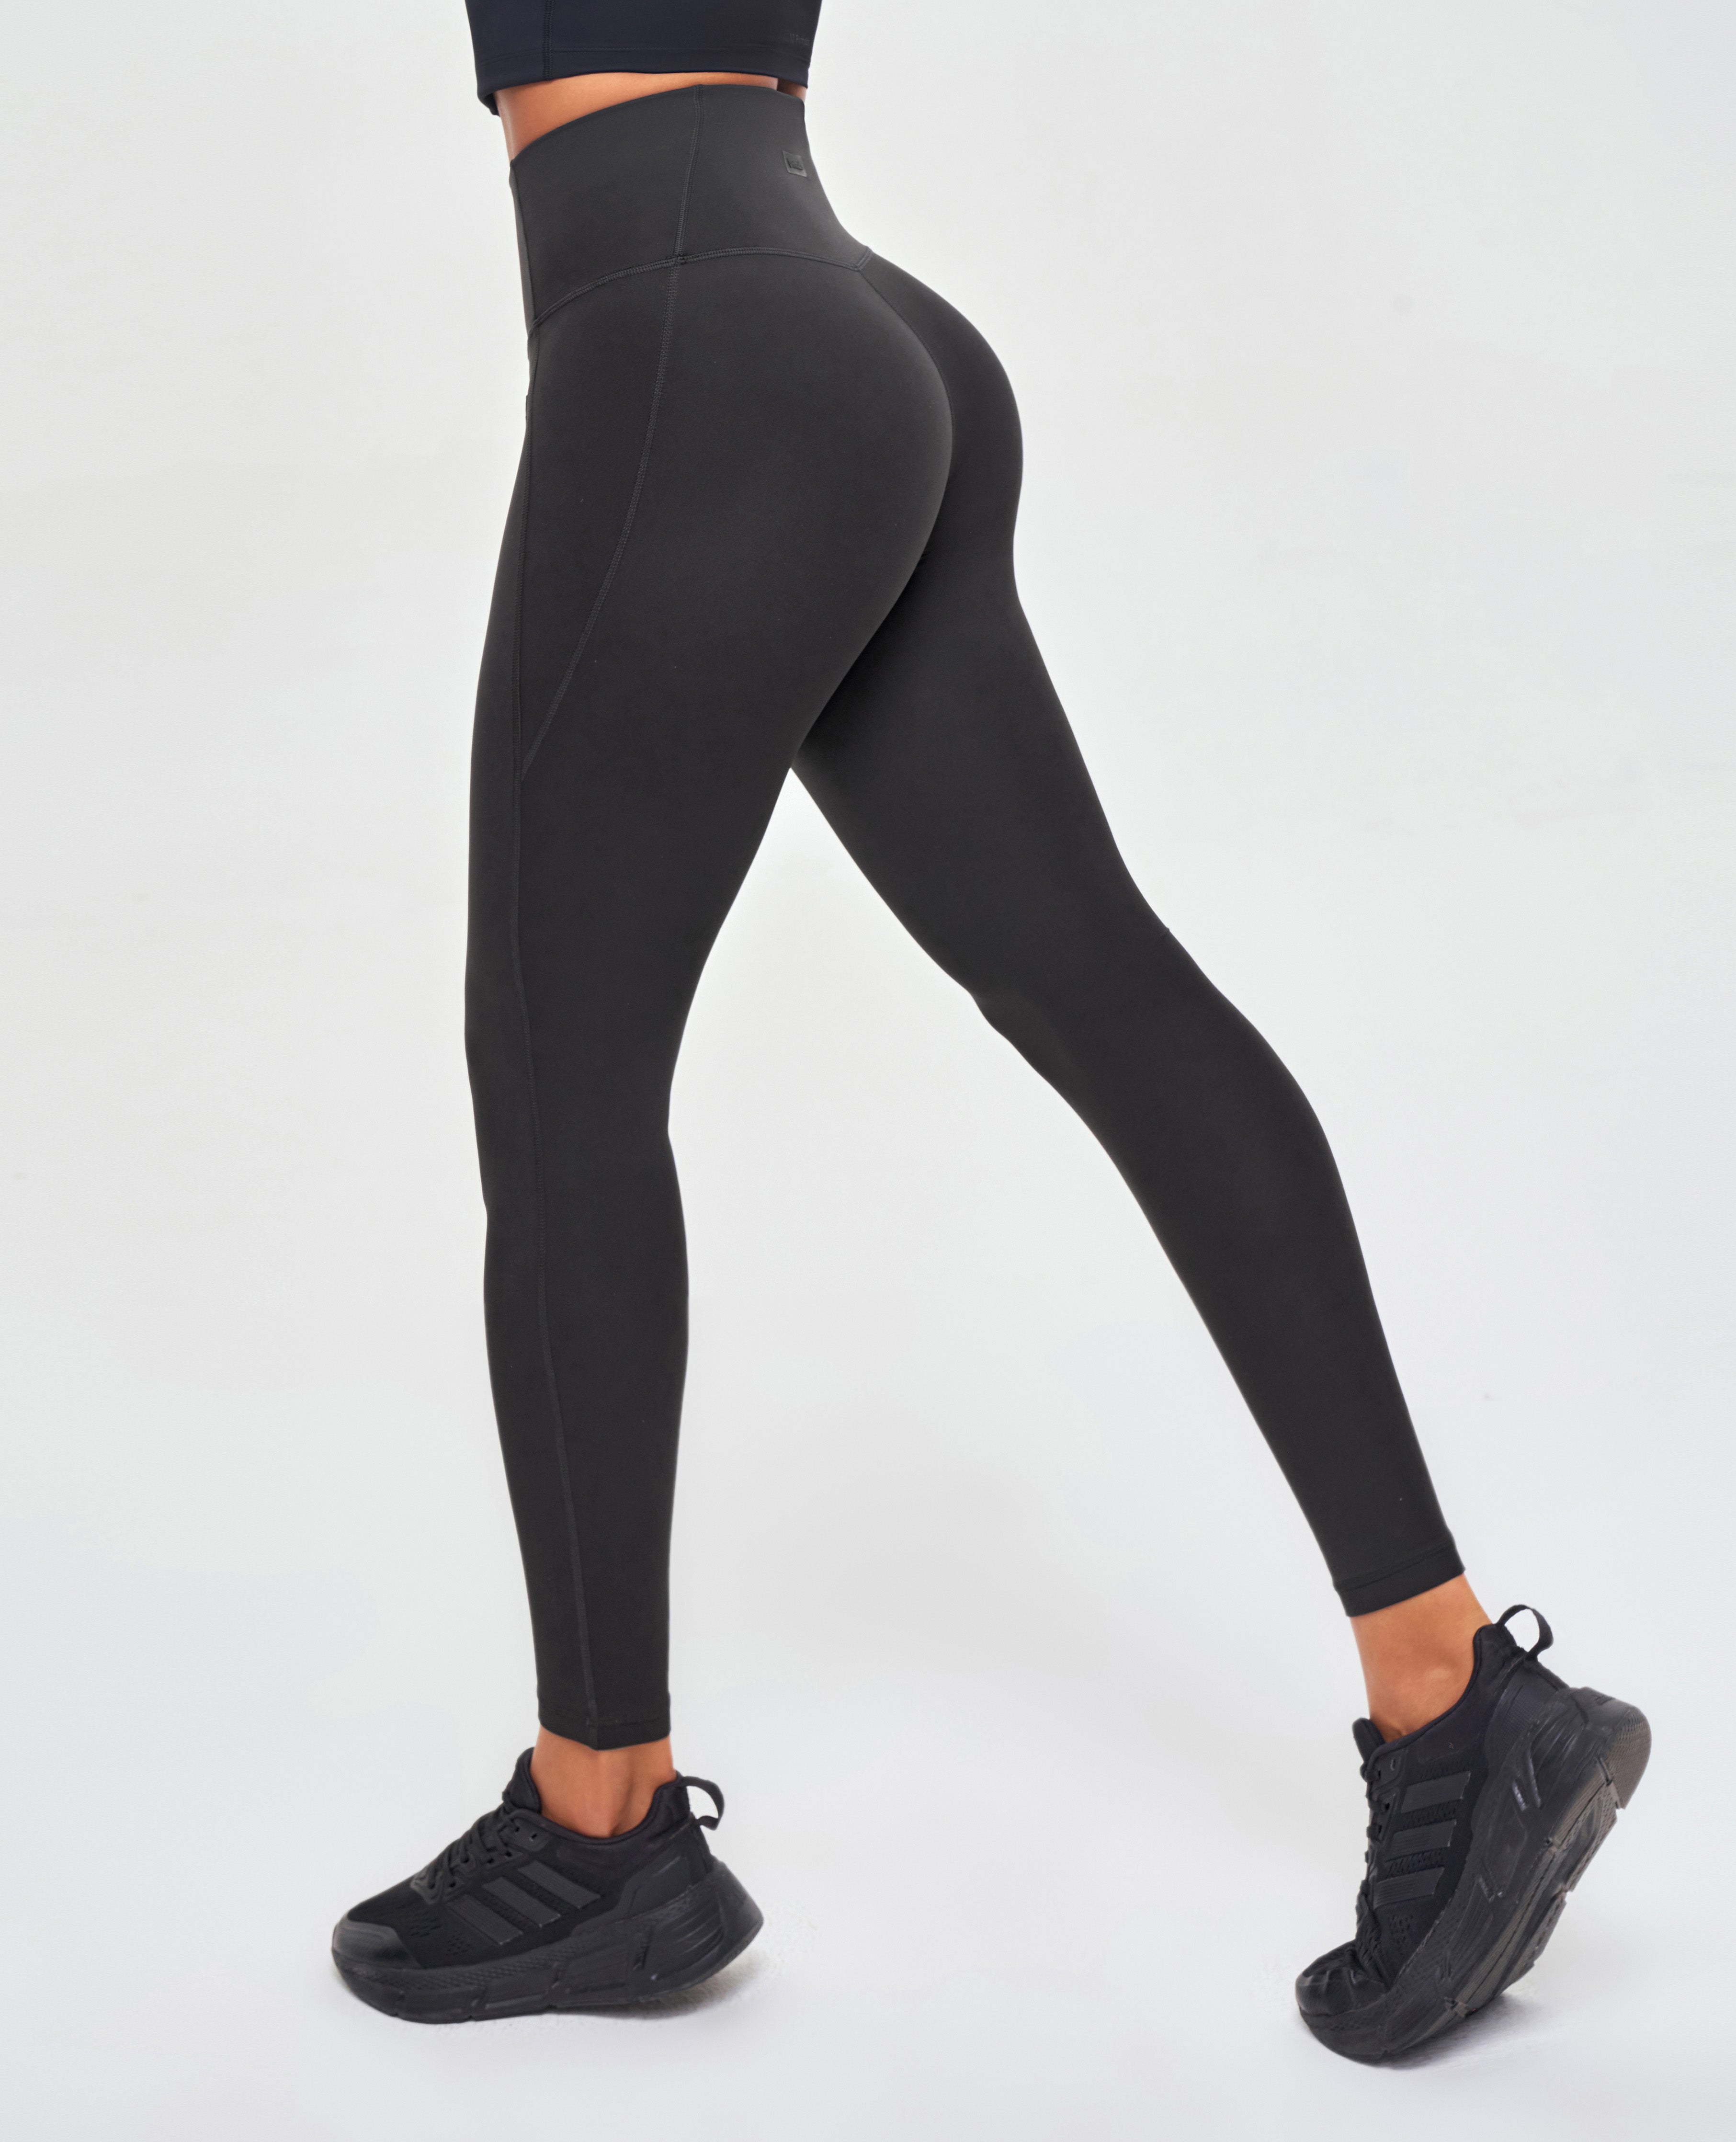 Buy All In Motion womens ultra high waisted 7 8 leggings black